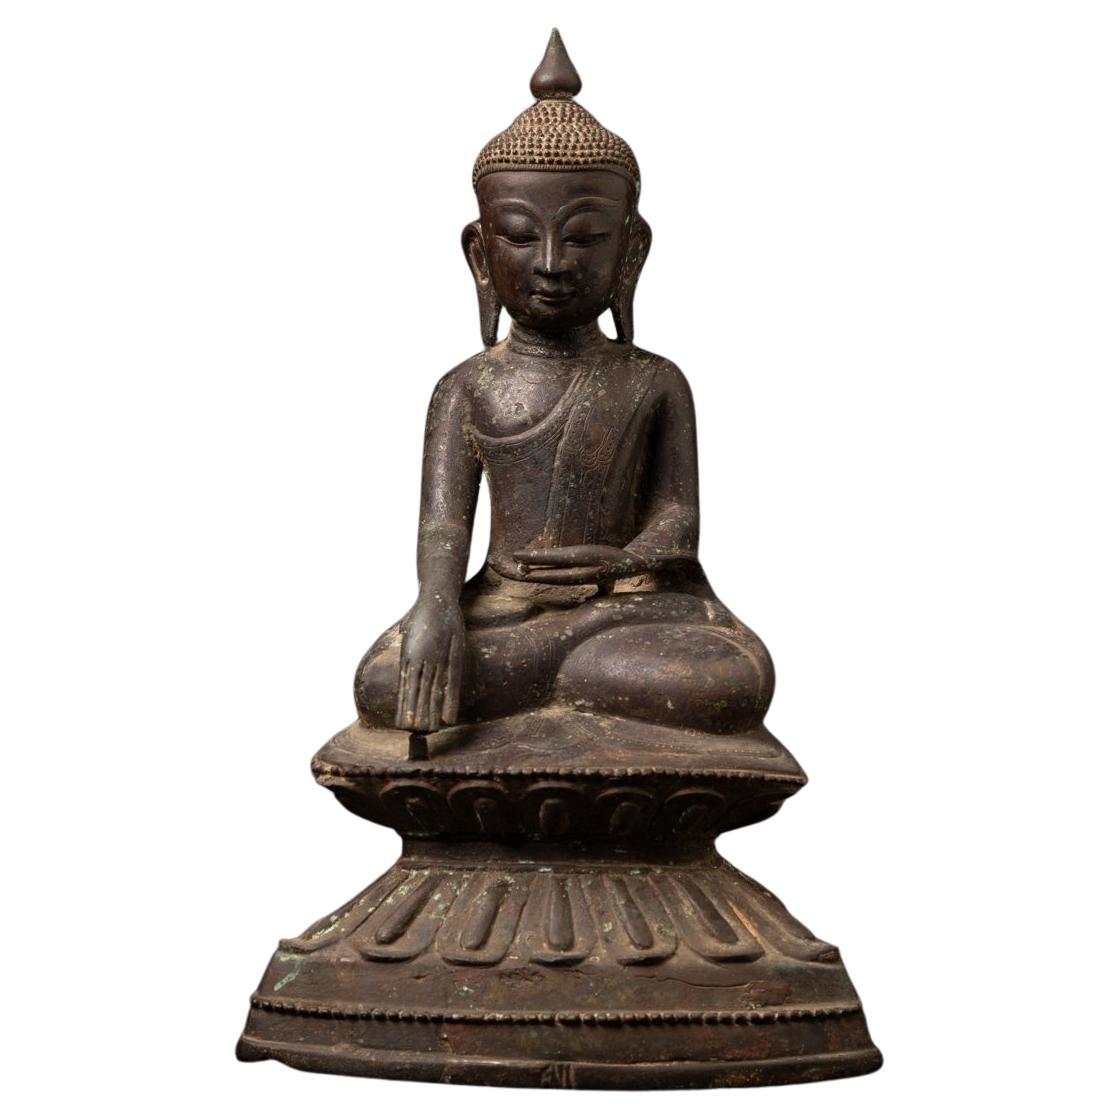 18th century Antique bronze Burmese Buddha statue from Burma